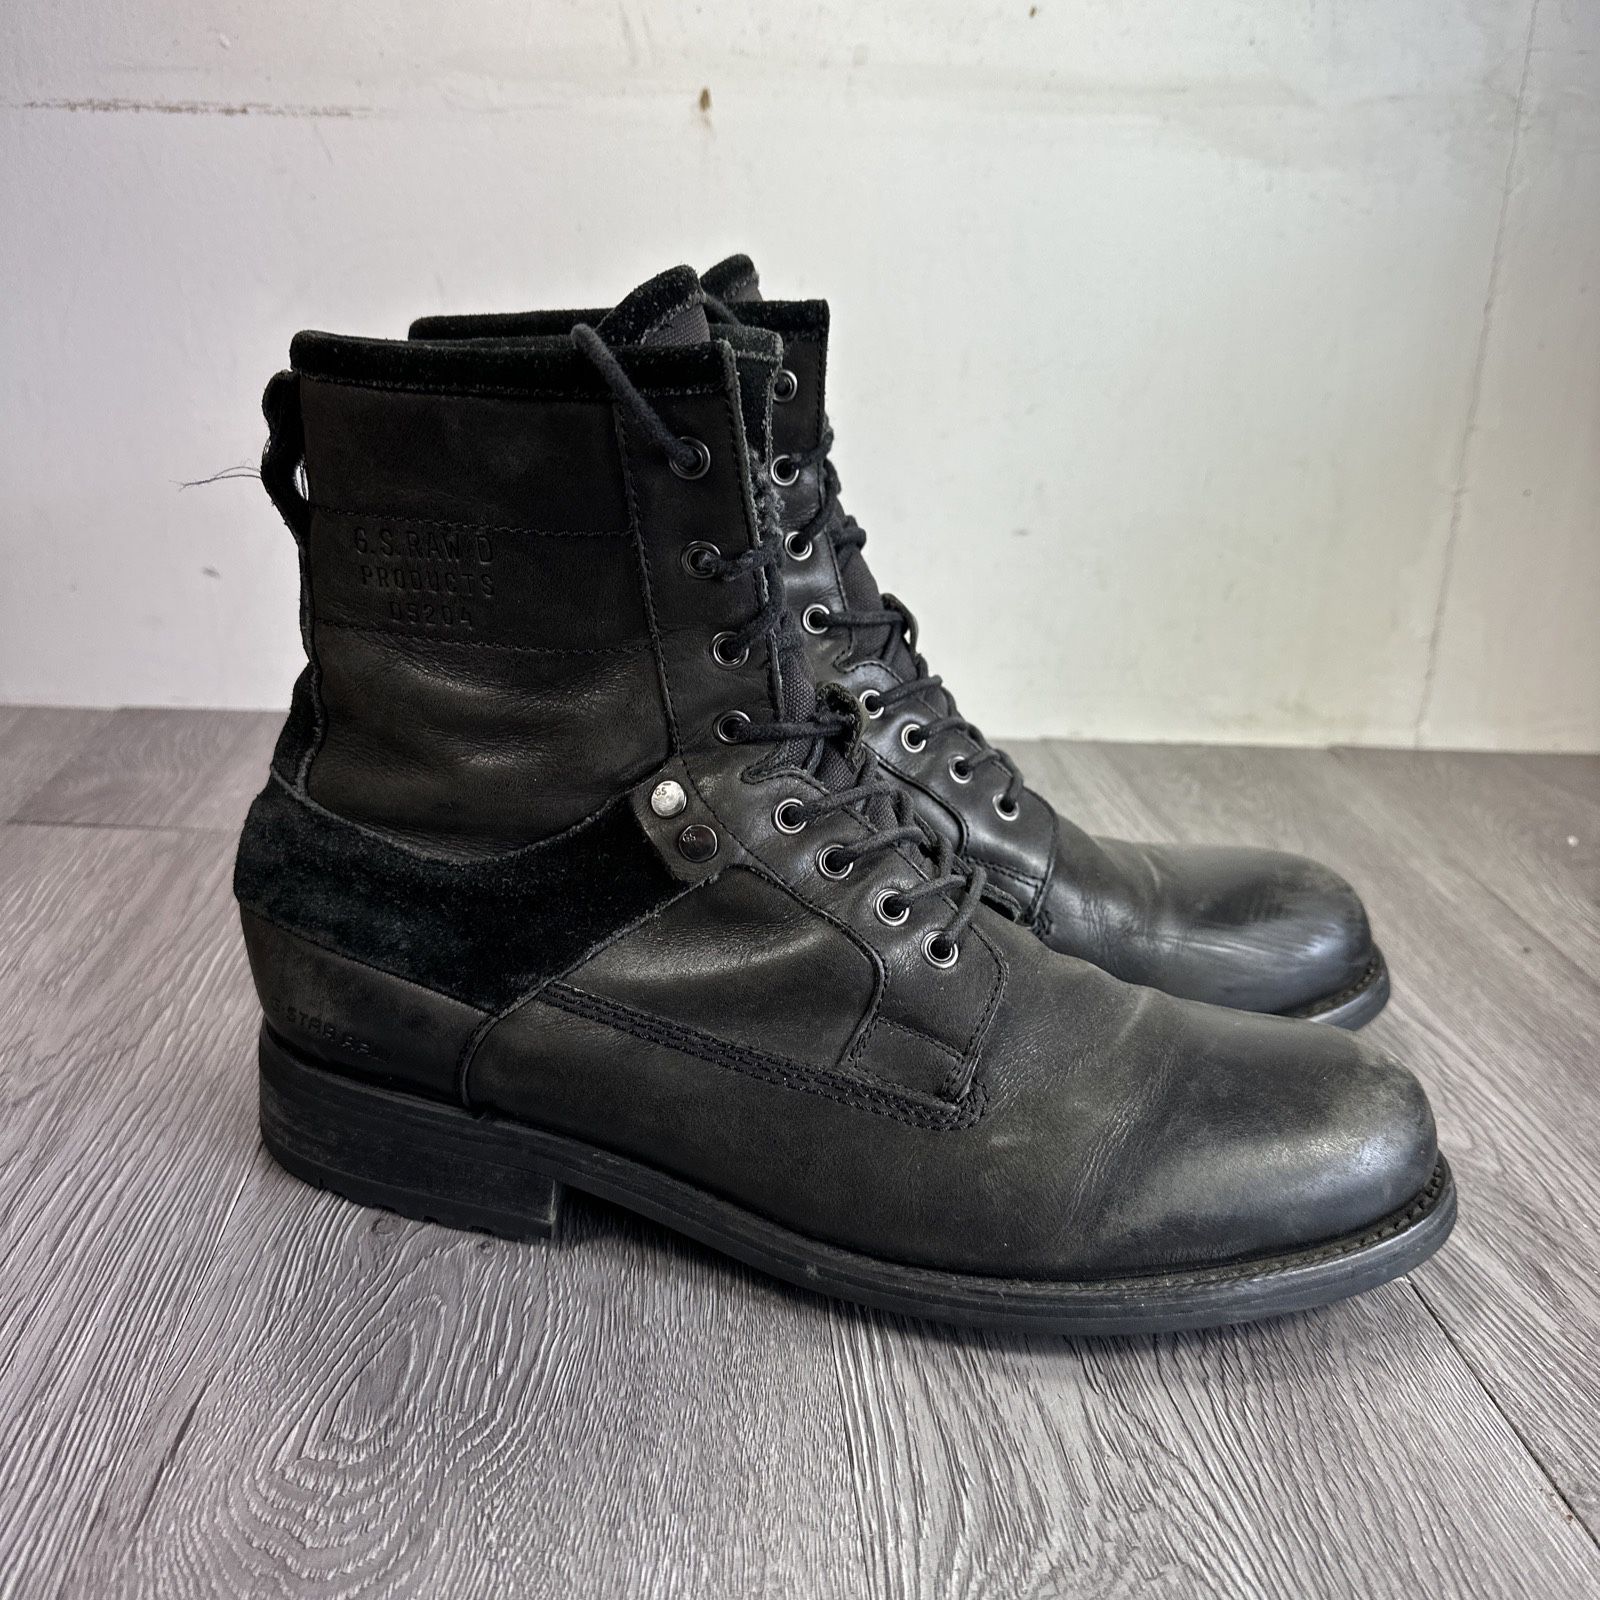 G-Star Raw Boots Men 13 Black Patton III Combat Cargo Military D5204 Biker Shoes